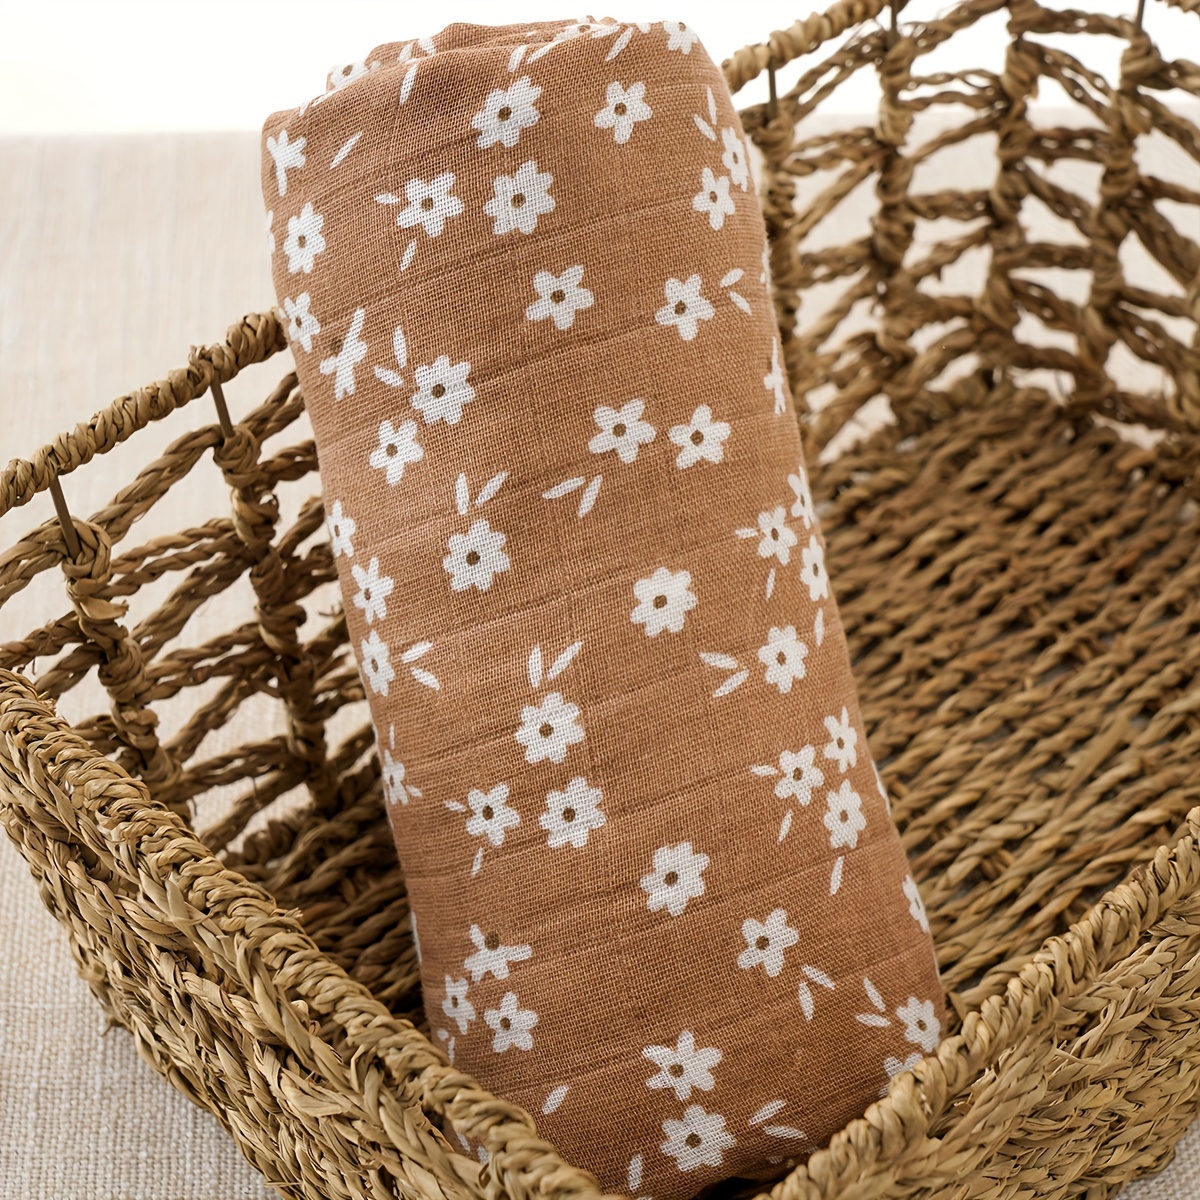 

Bamboo Cotton Muslin Blanket, Unisex Large 120*110cm 2 Layers Blanket